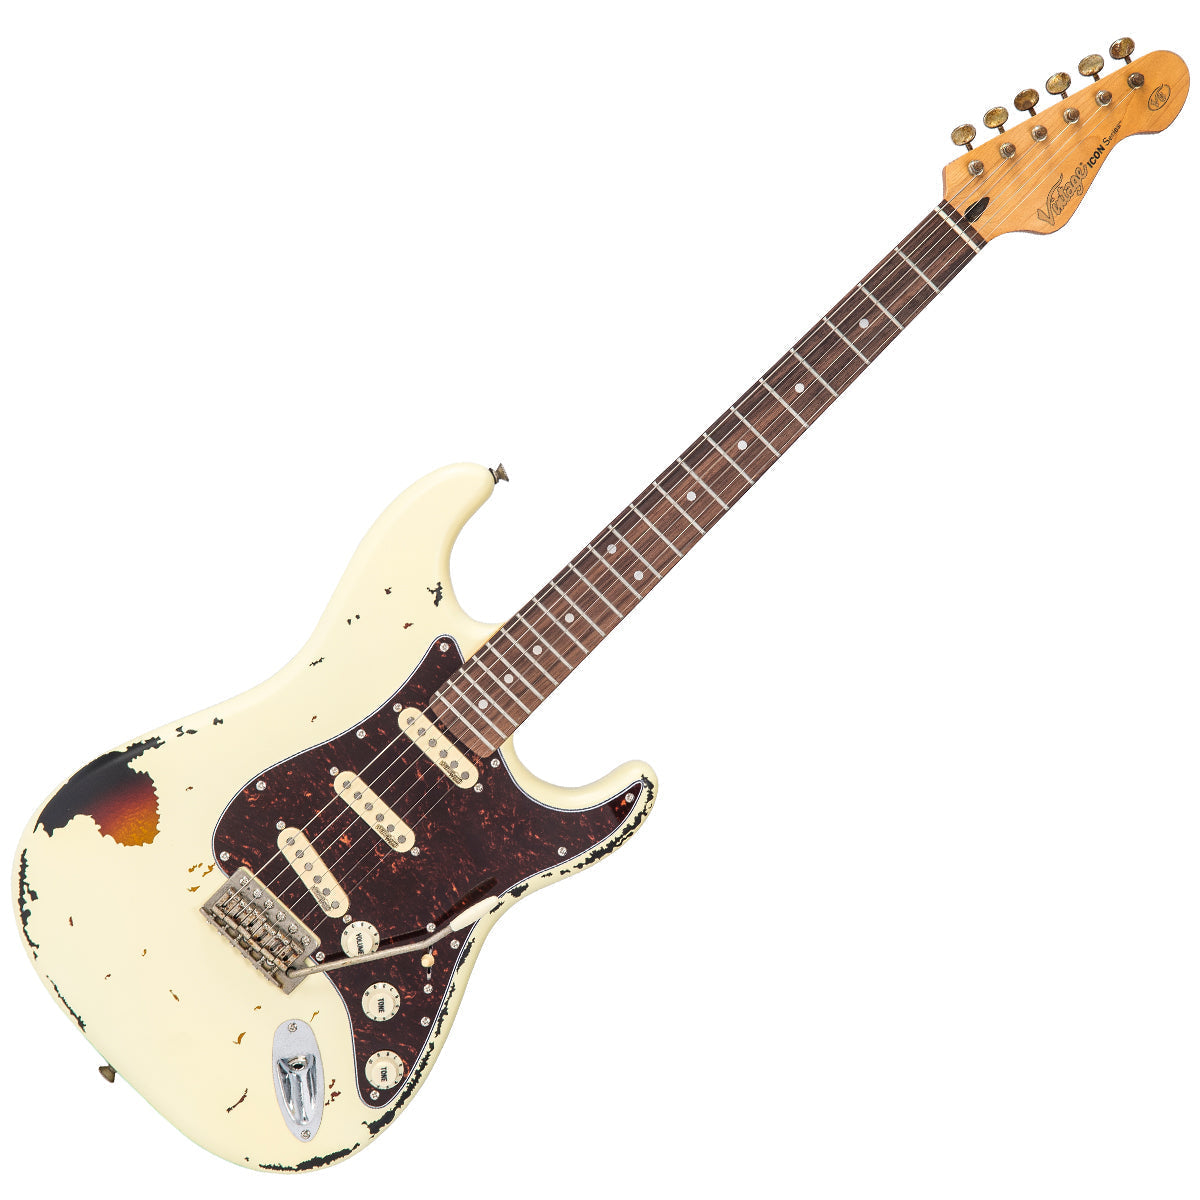 Vintage V6 ICON Electric Guitar ~ Distressed White Over Sunburst, Electric Guitar for sale at Richards Guitars.